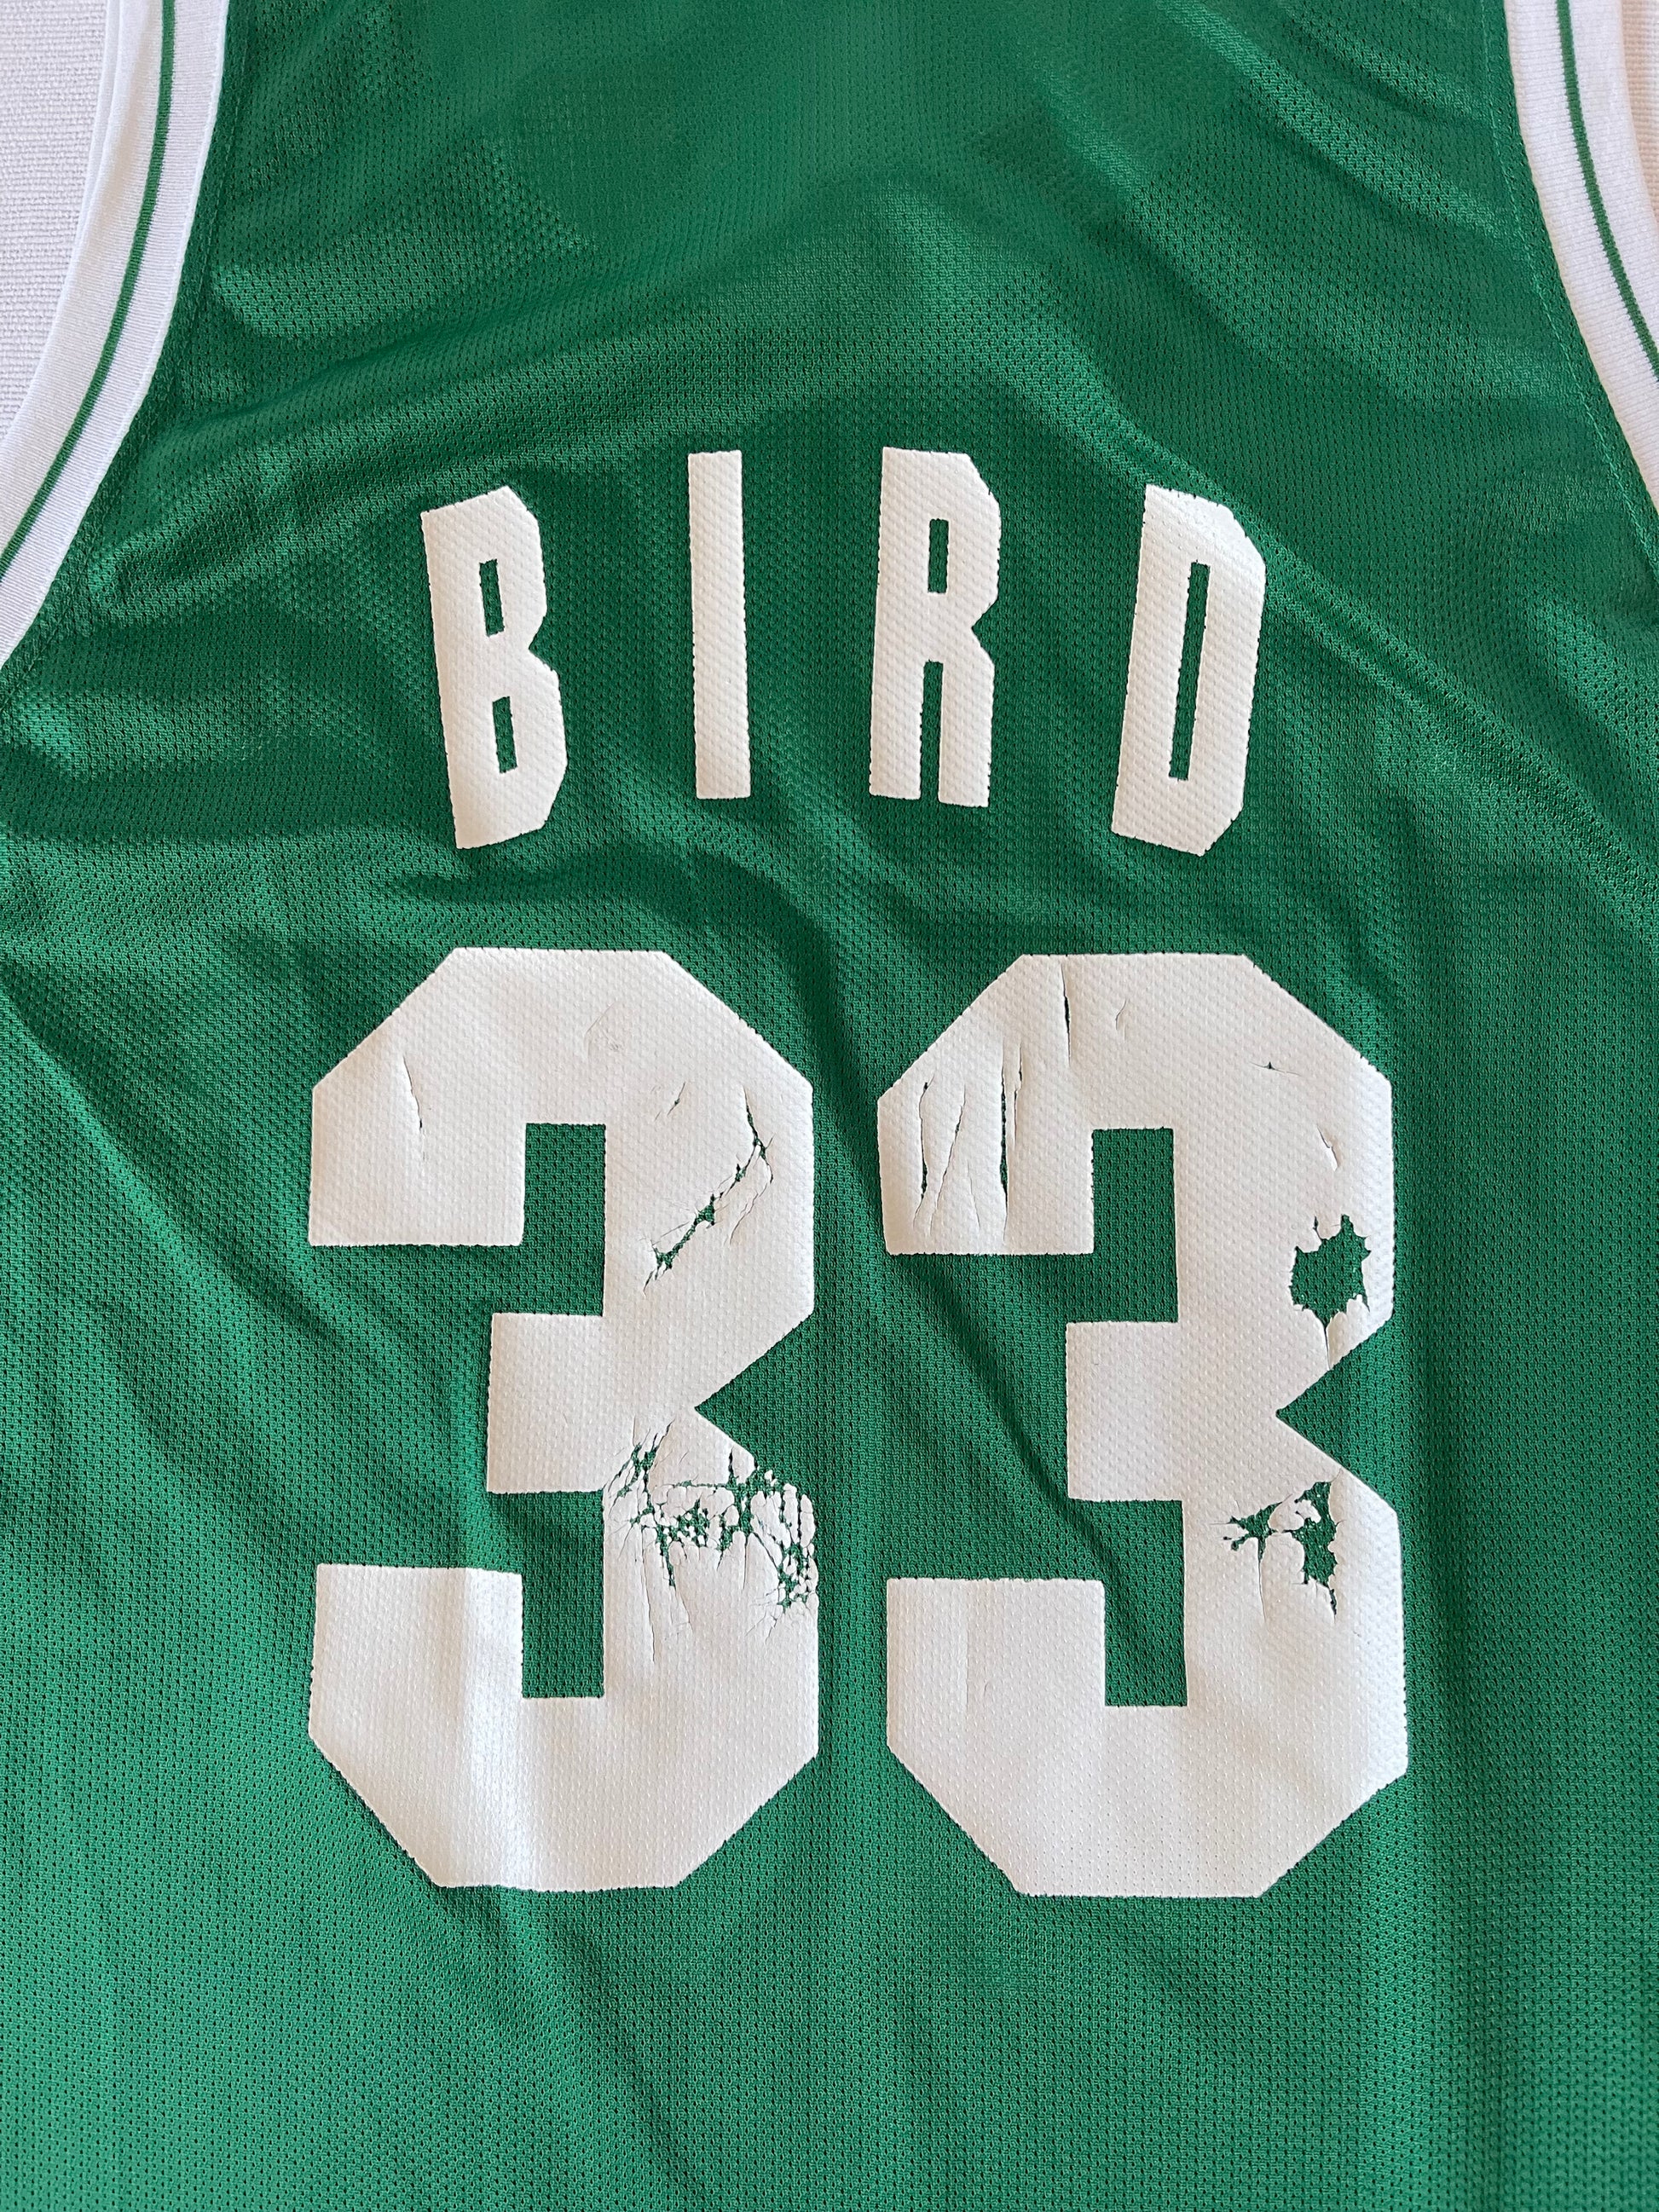 Vintage 90's Boston Celtics Larry Bird #33 Champion Home Basketball NBA Jersey Size 44 / L Made in USA Green